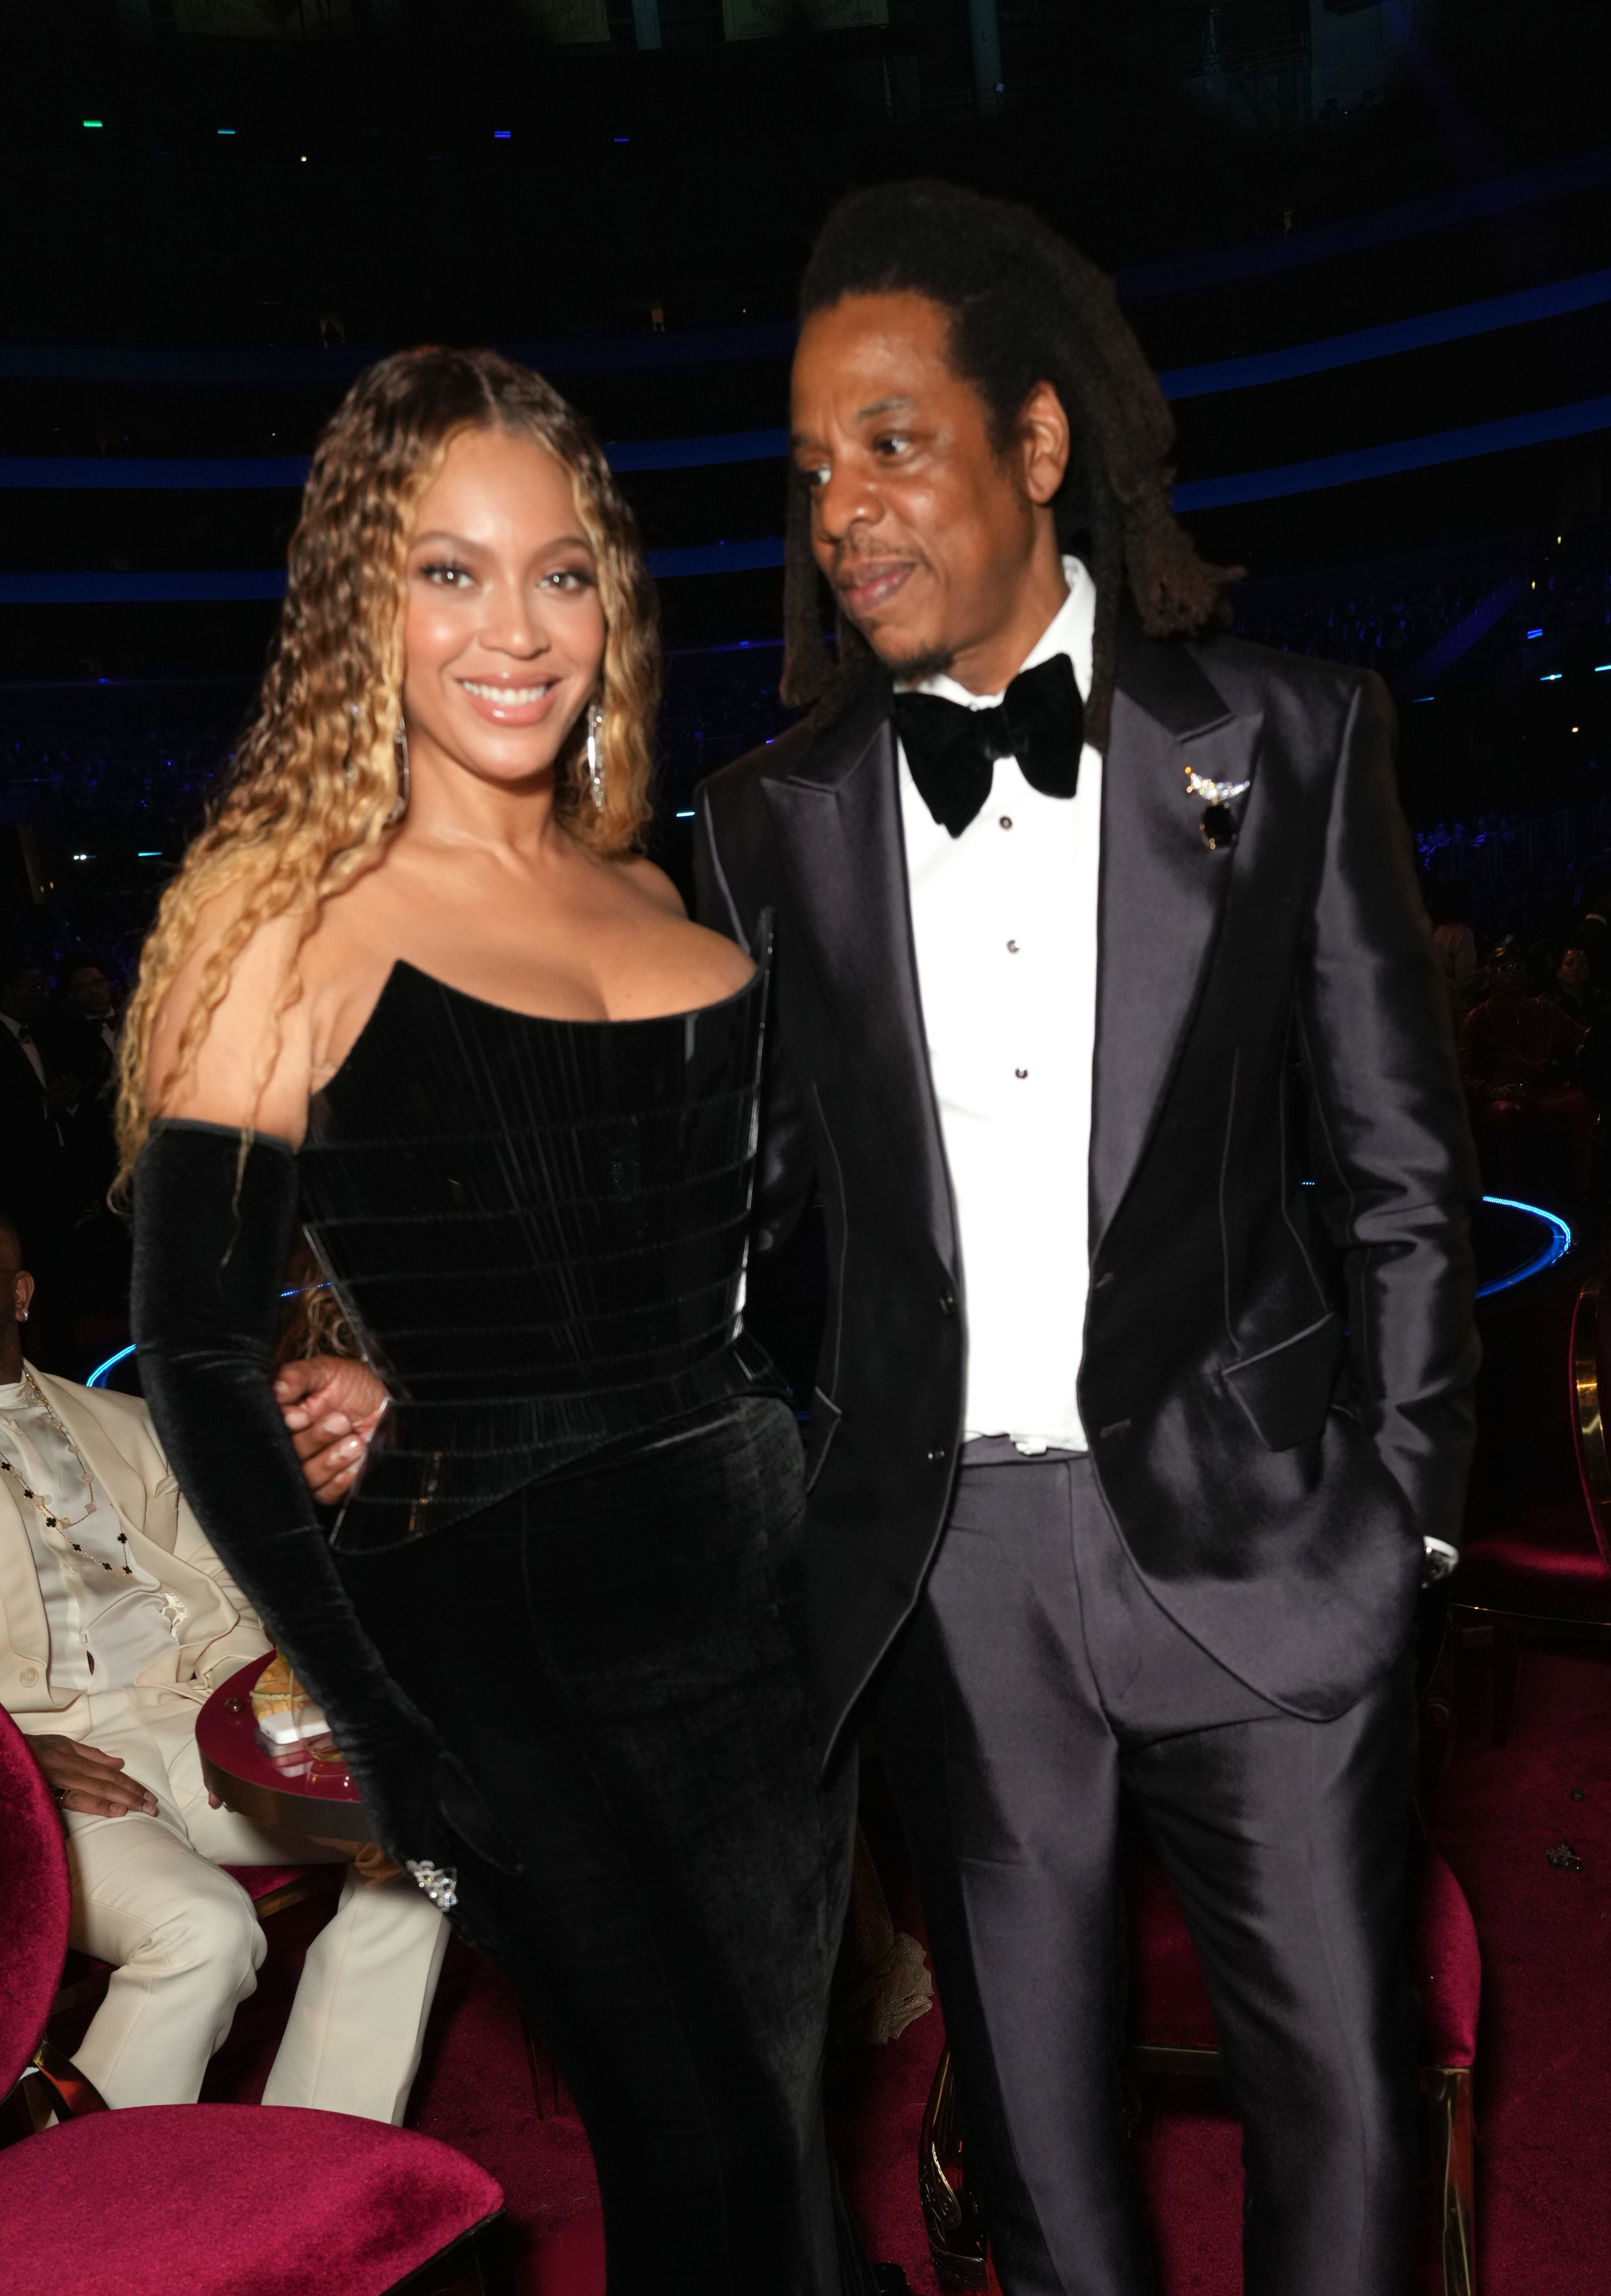 Jay-Z looking at a smiling Beyoncé